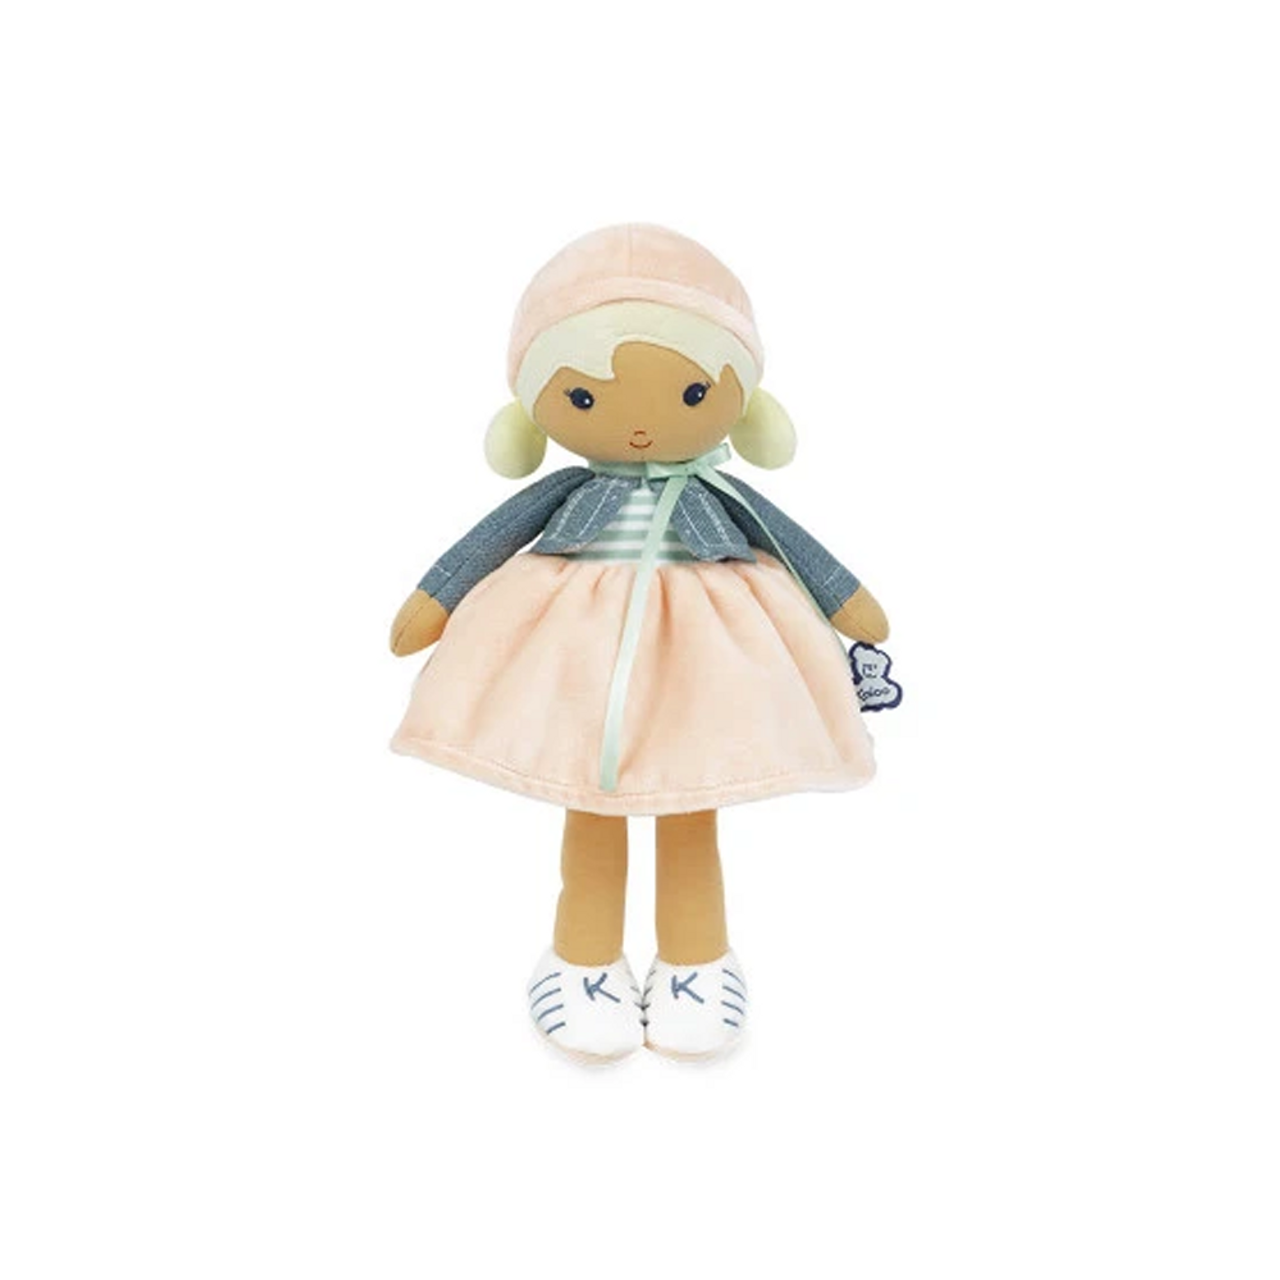 Buy Kaloo Doll Chloe Online – Adorable Gift for Kids